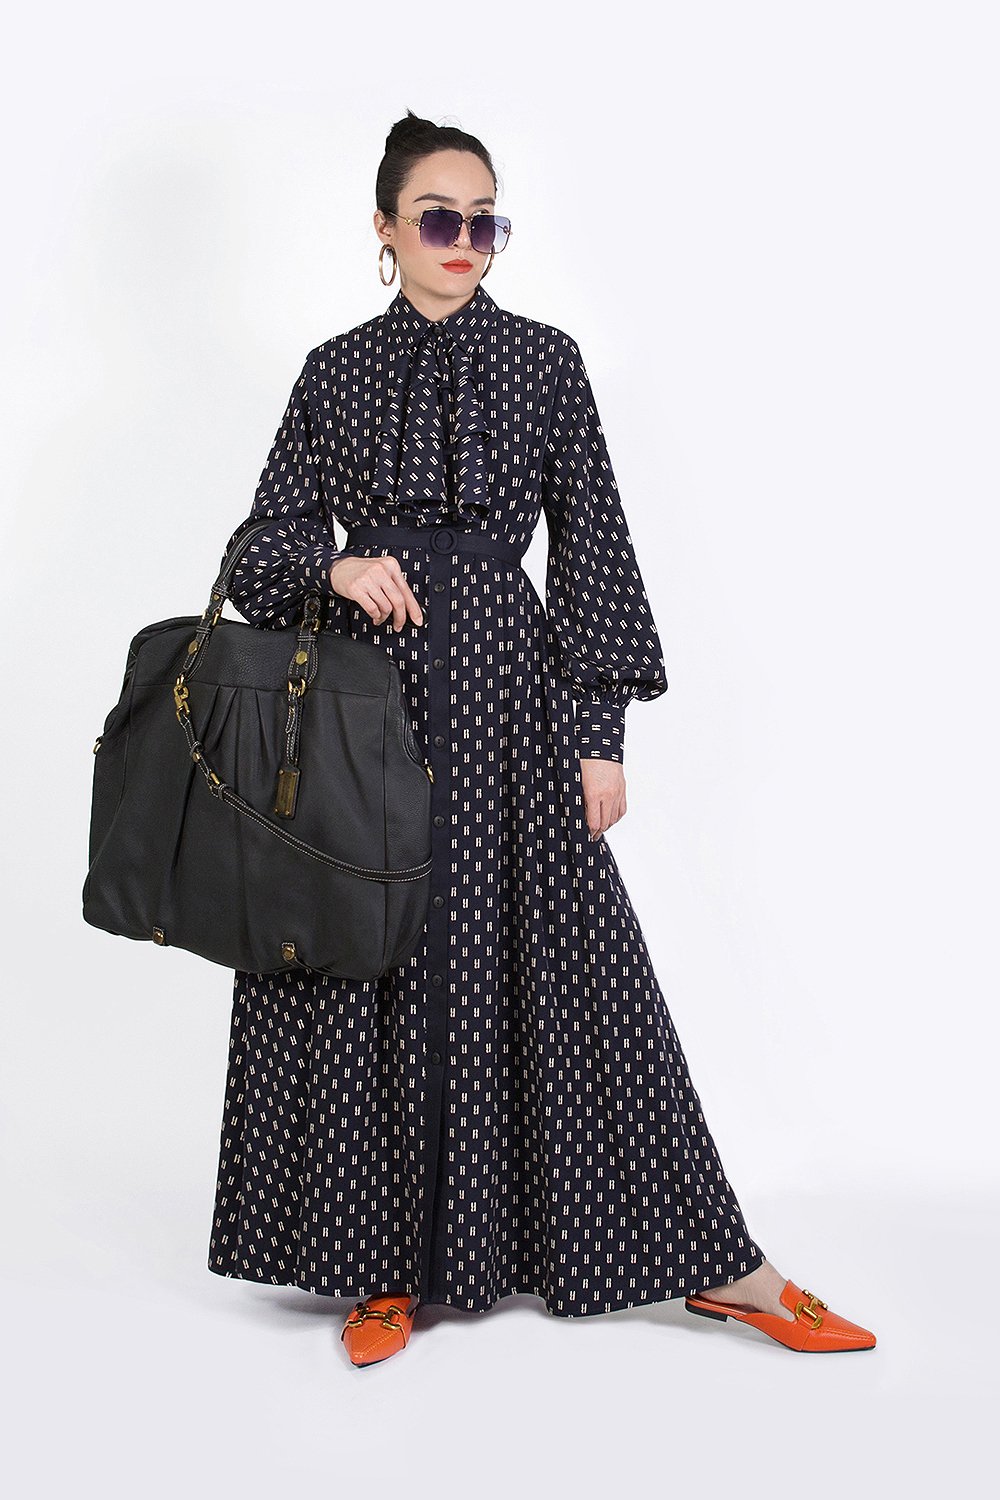 Matilda Maxi Shirt Dress (with Victorian Ruffle Collar & Belt)  by WLS ชุดแม็กซี่เดรสคอปกระบายวิคตอเรียน